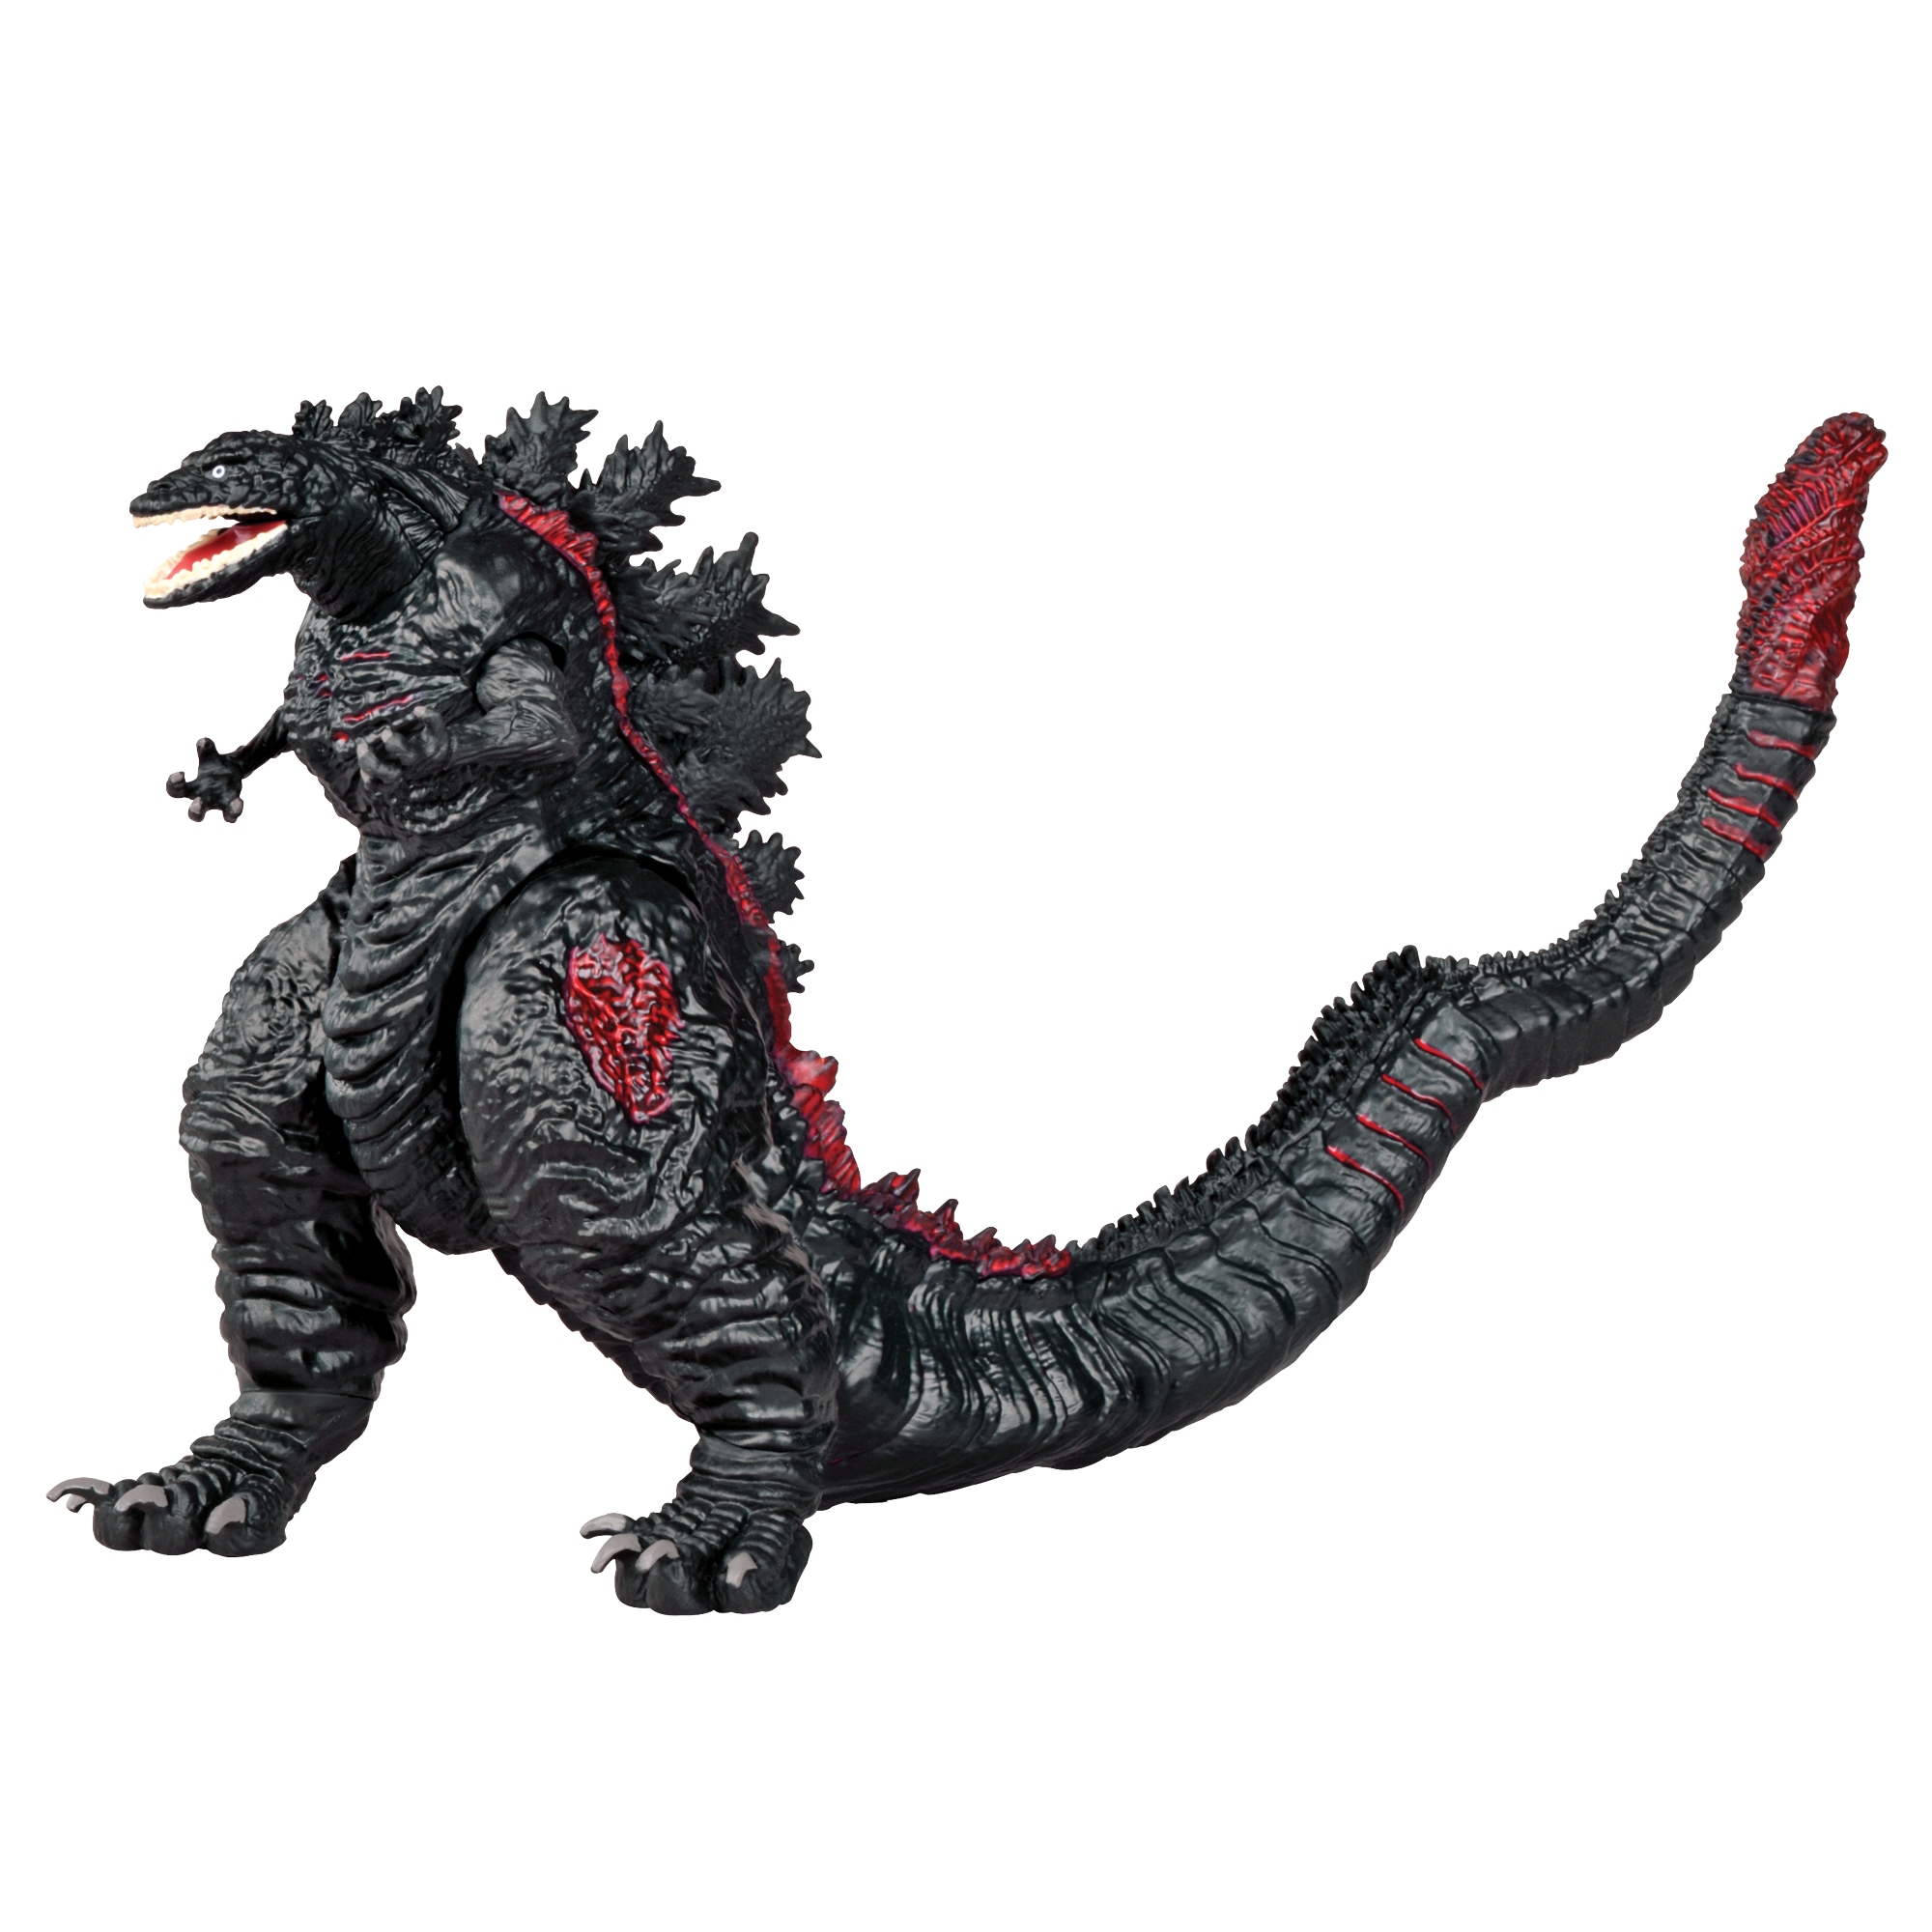 Playmates Godzilla 2016 New Release 